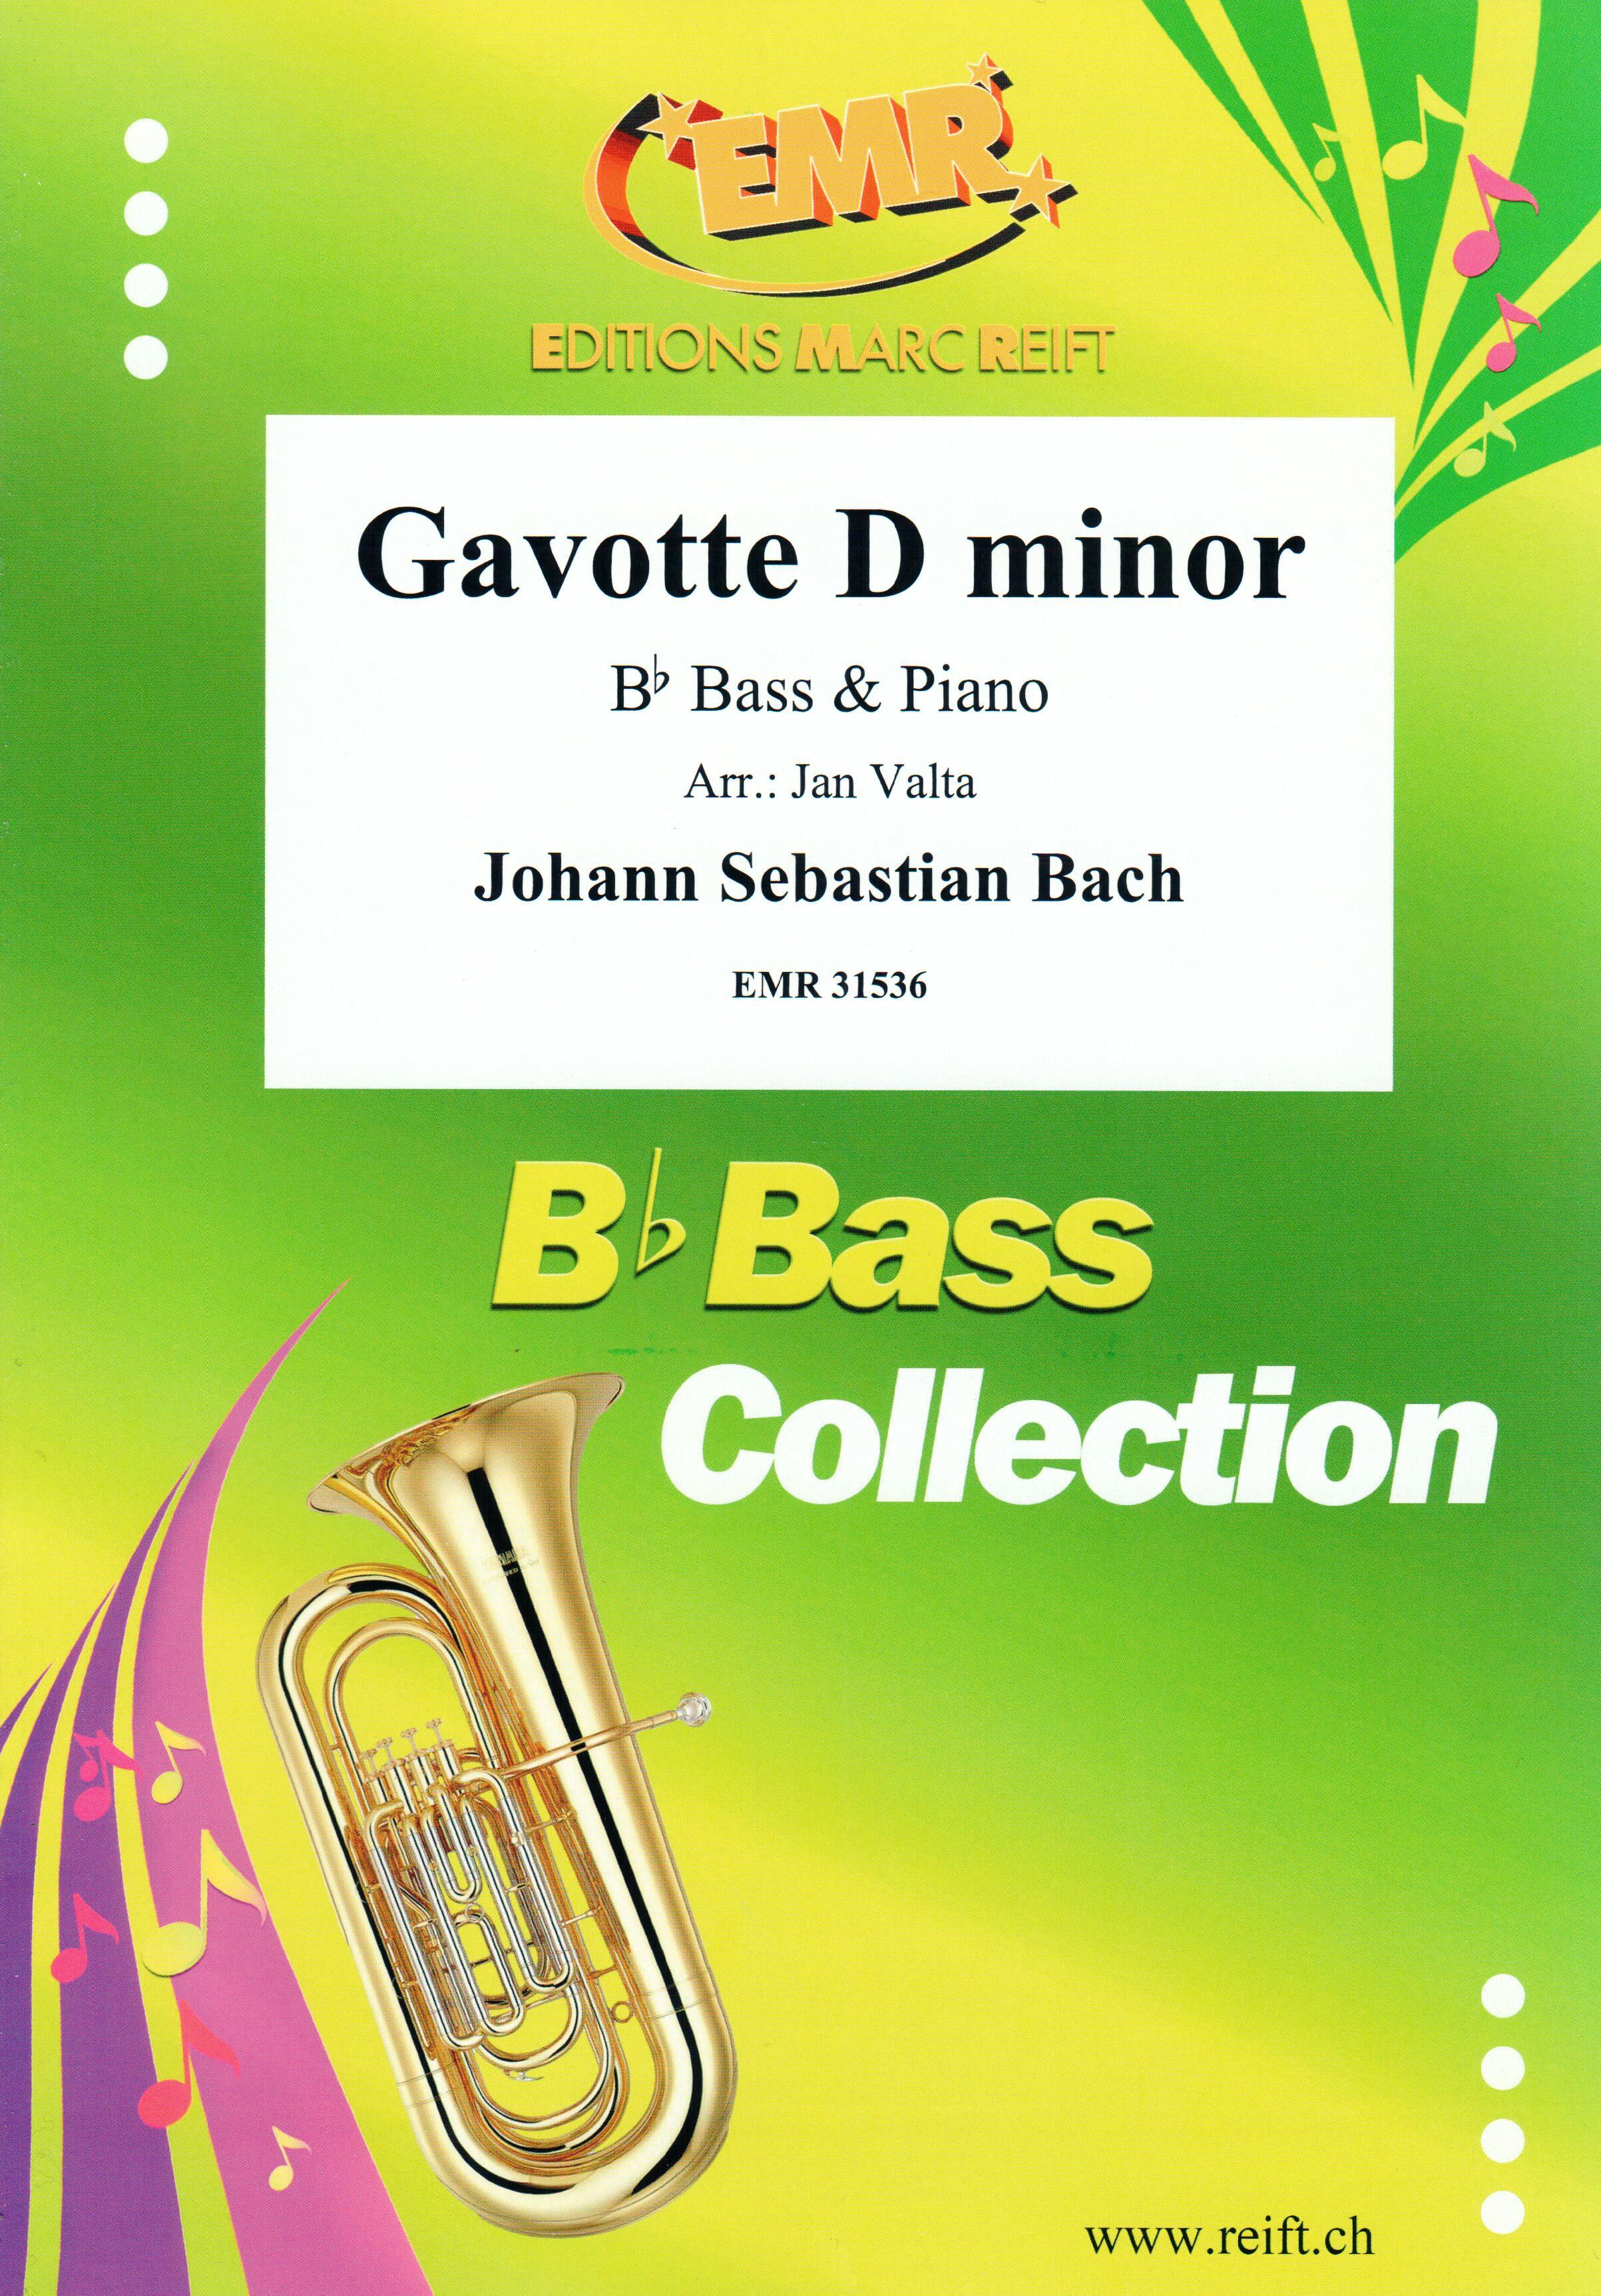 GAVOTTE D MINOR, SOLOS - E♭. Bass